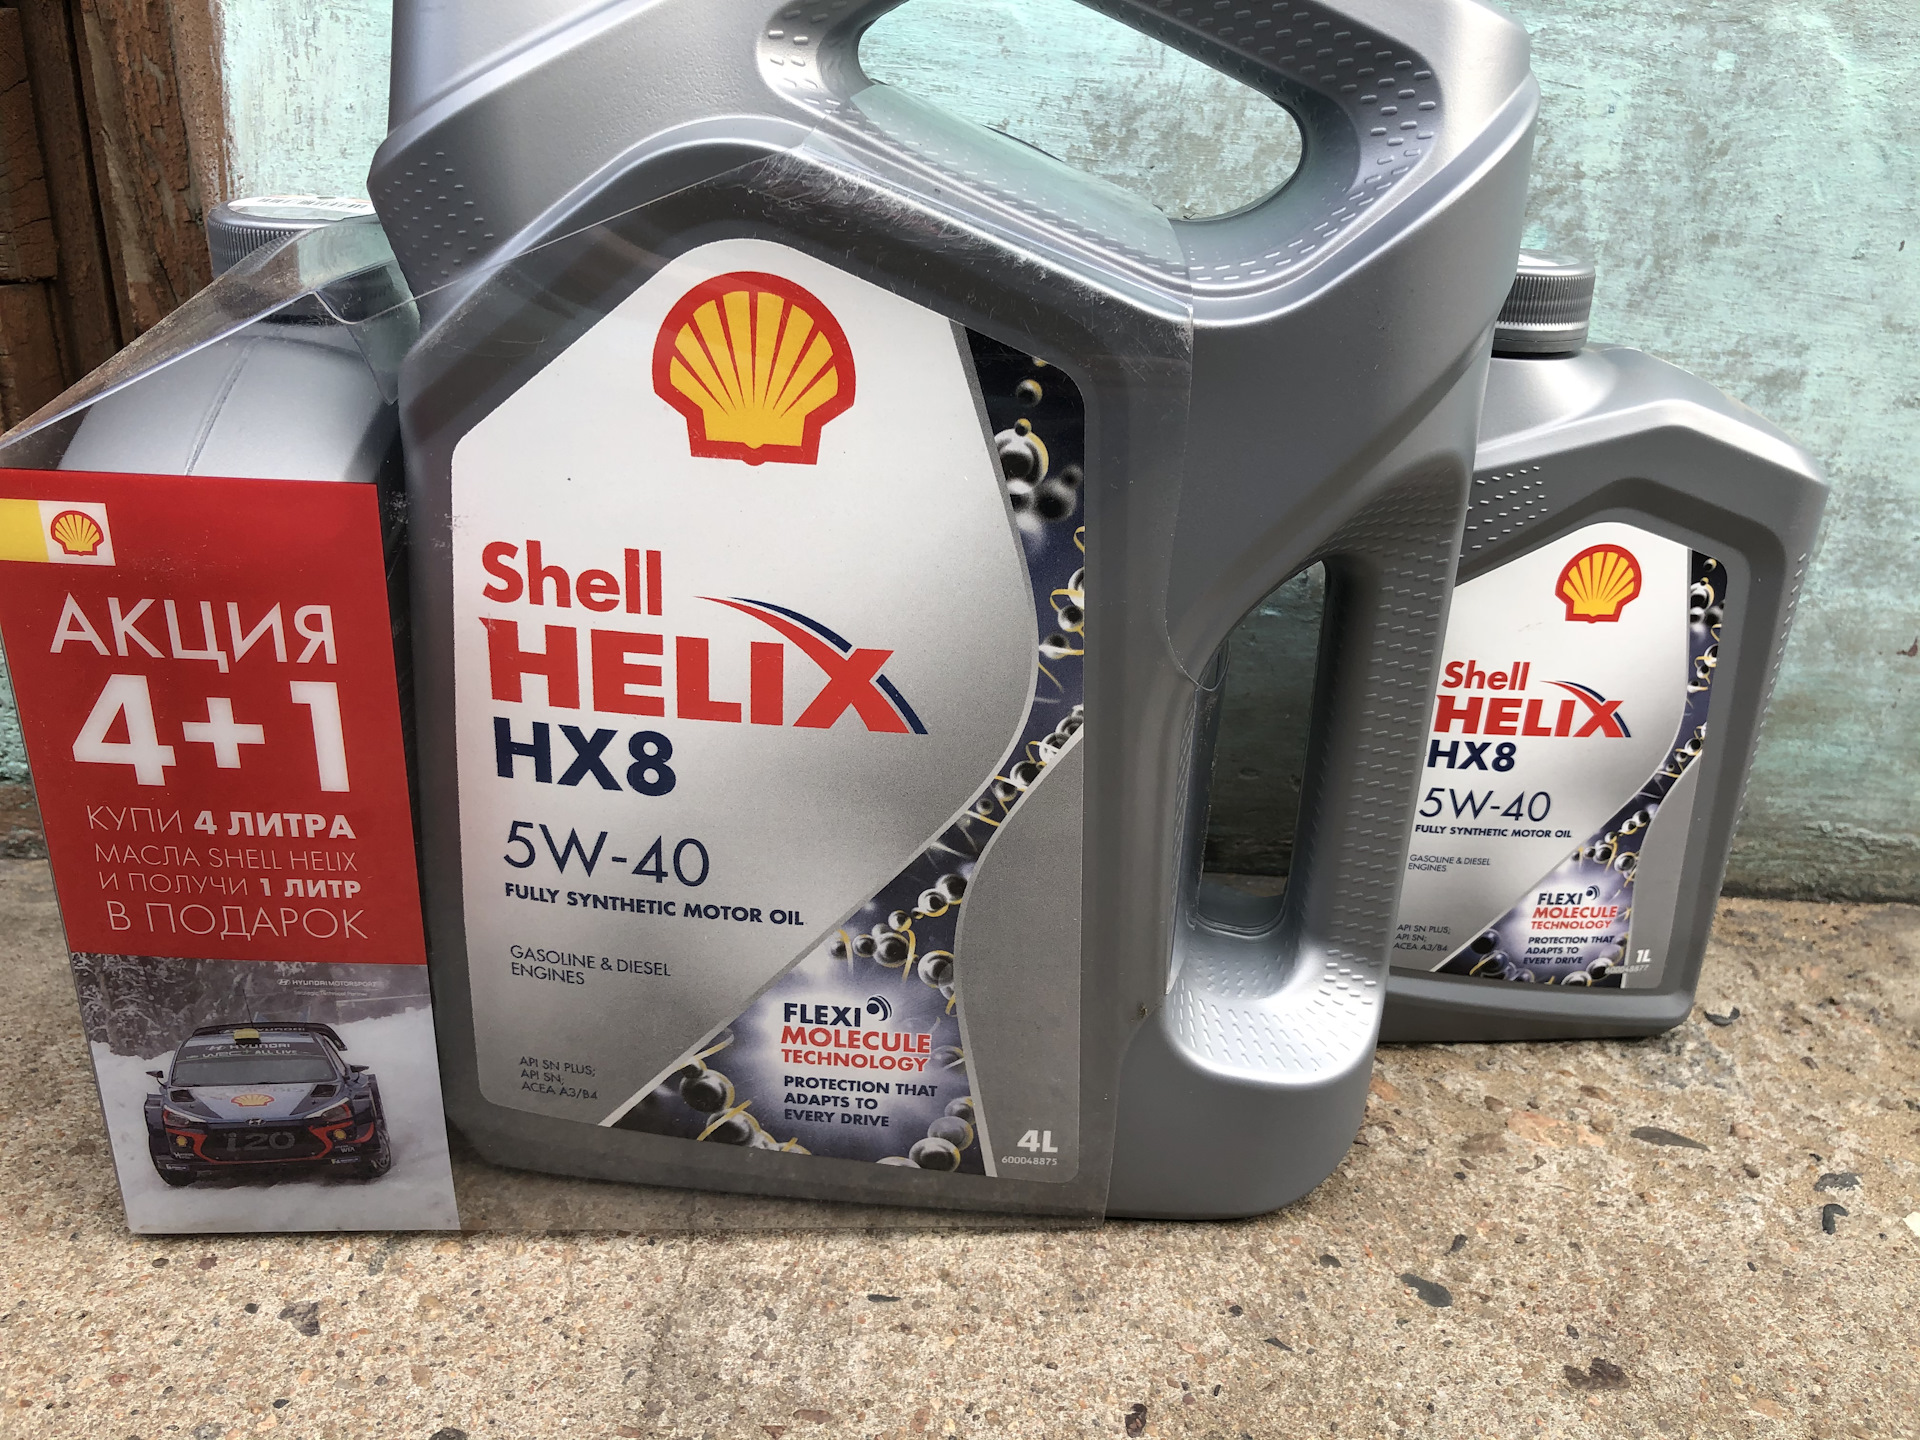 Shell hx8 5w30 купить. Shell hx8 5w40. Масло Shell hx8 5w40. Масло Шелл Хеликс hx8 5w40. Shell Helix hx5 5w-30.